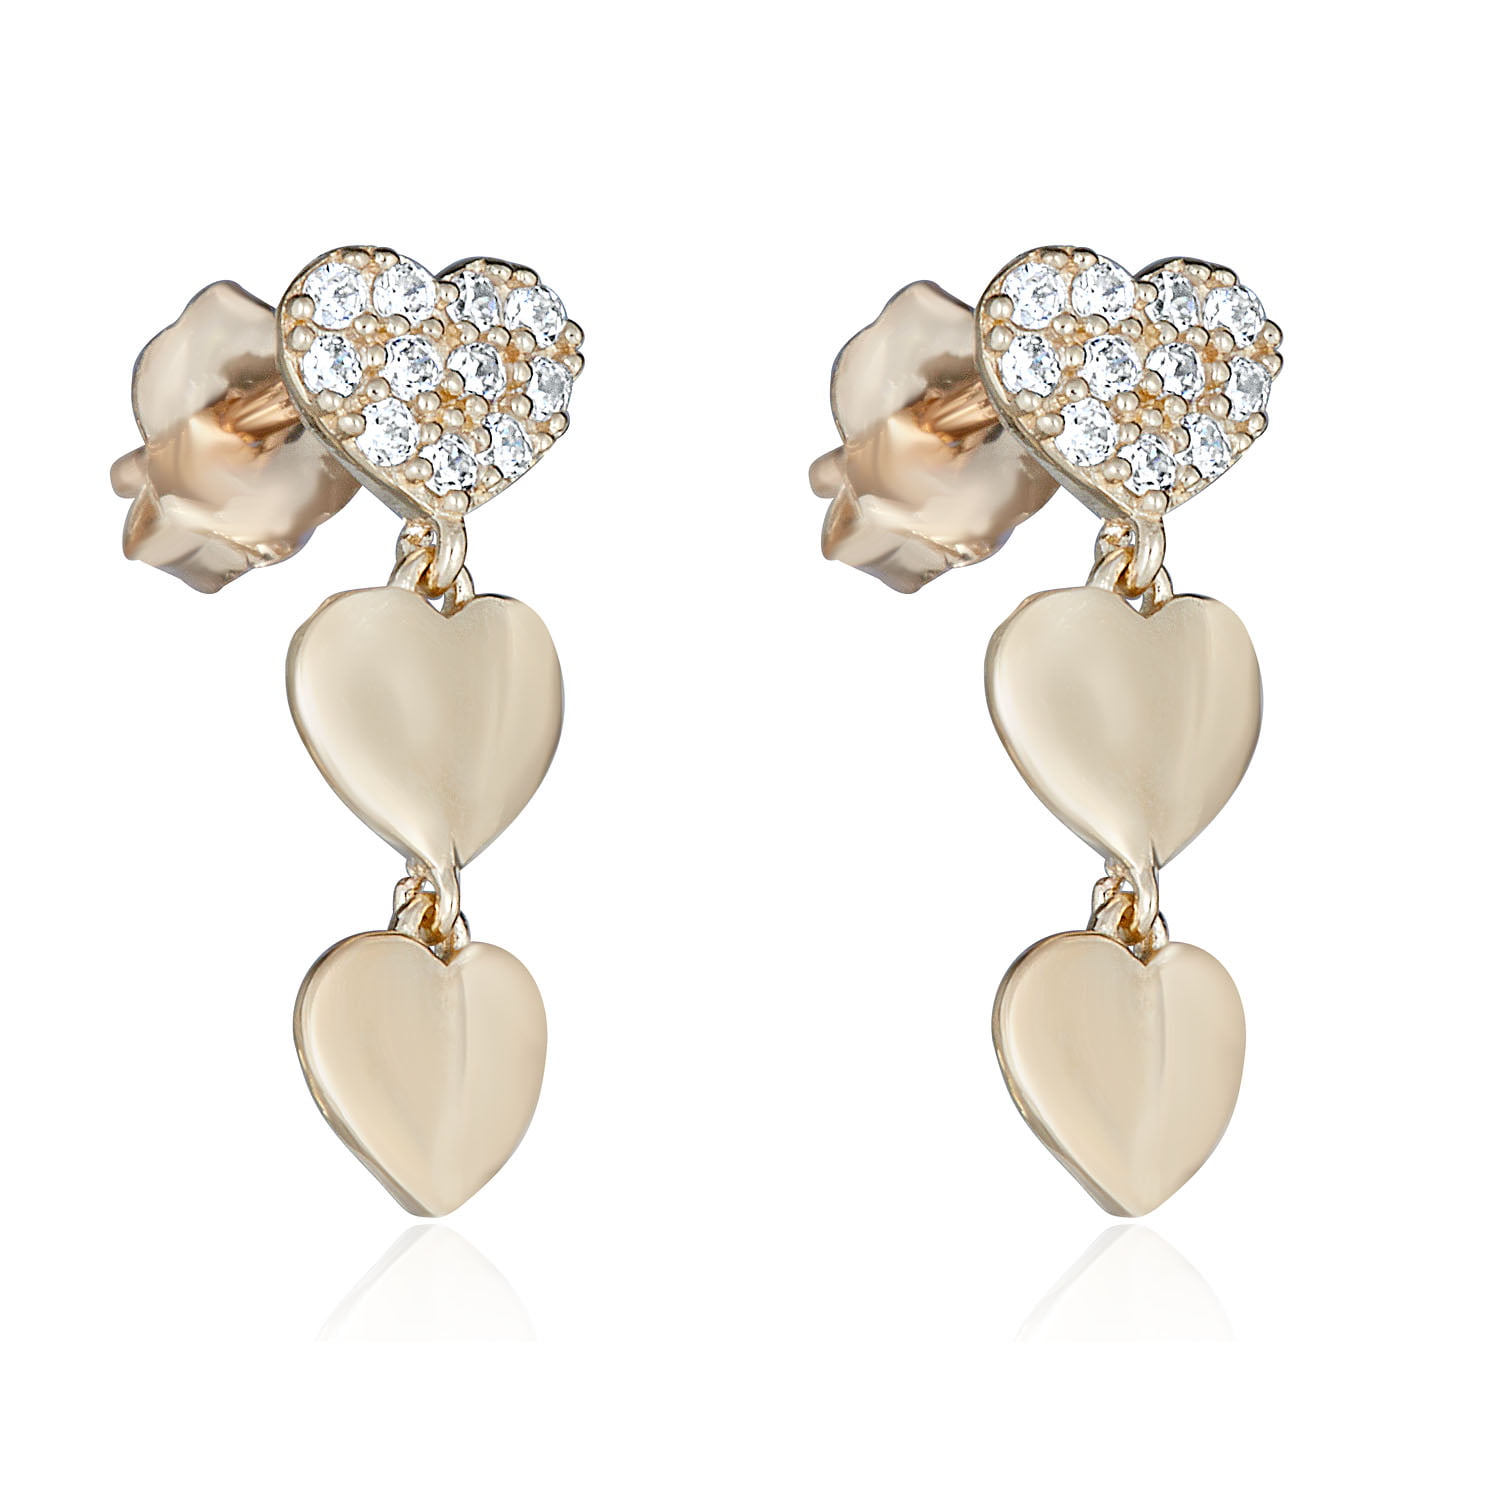 Details about   10K Yellow Gold  Puffed Triple Heart with Cubic Zirconia CZ Dangle Drop Earrings